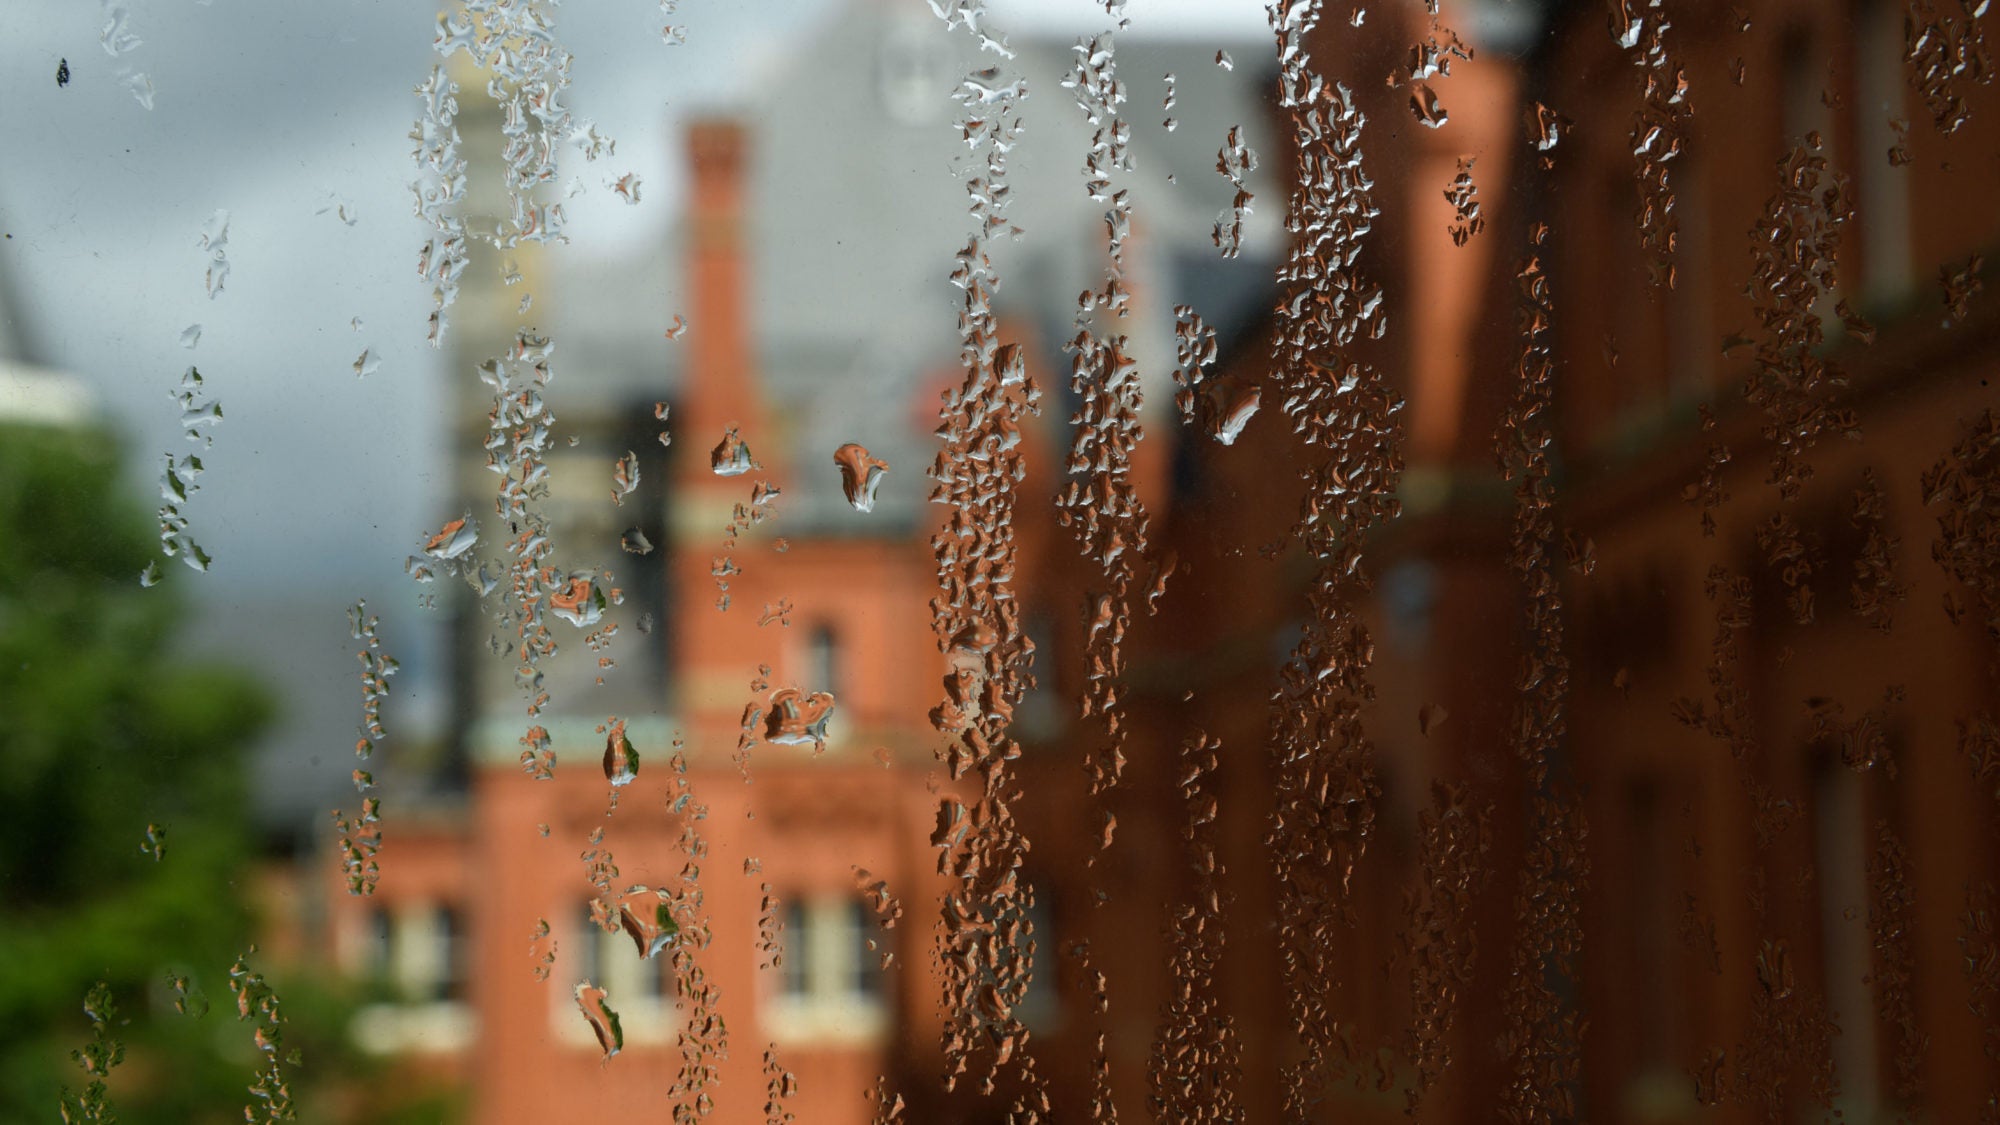 Spending Rainy Days in DC - Georgetown University